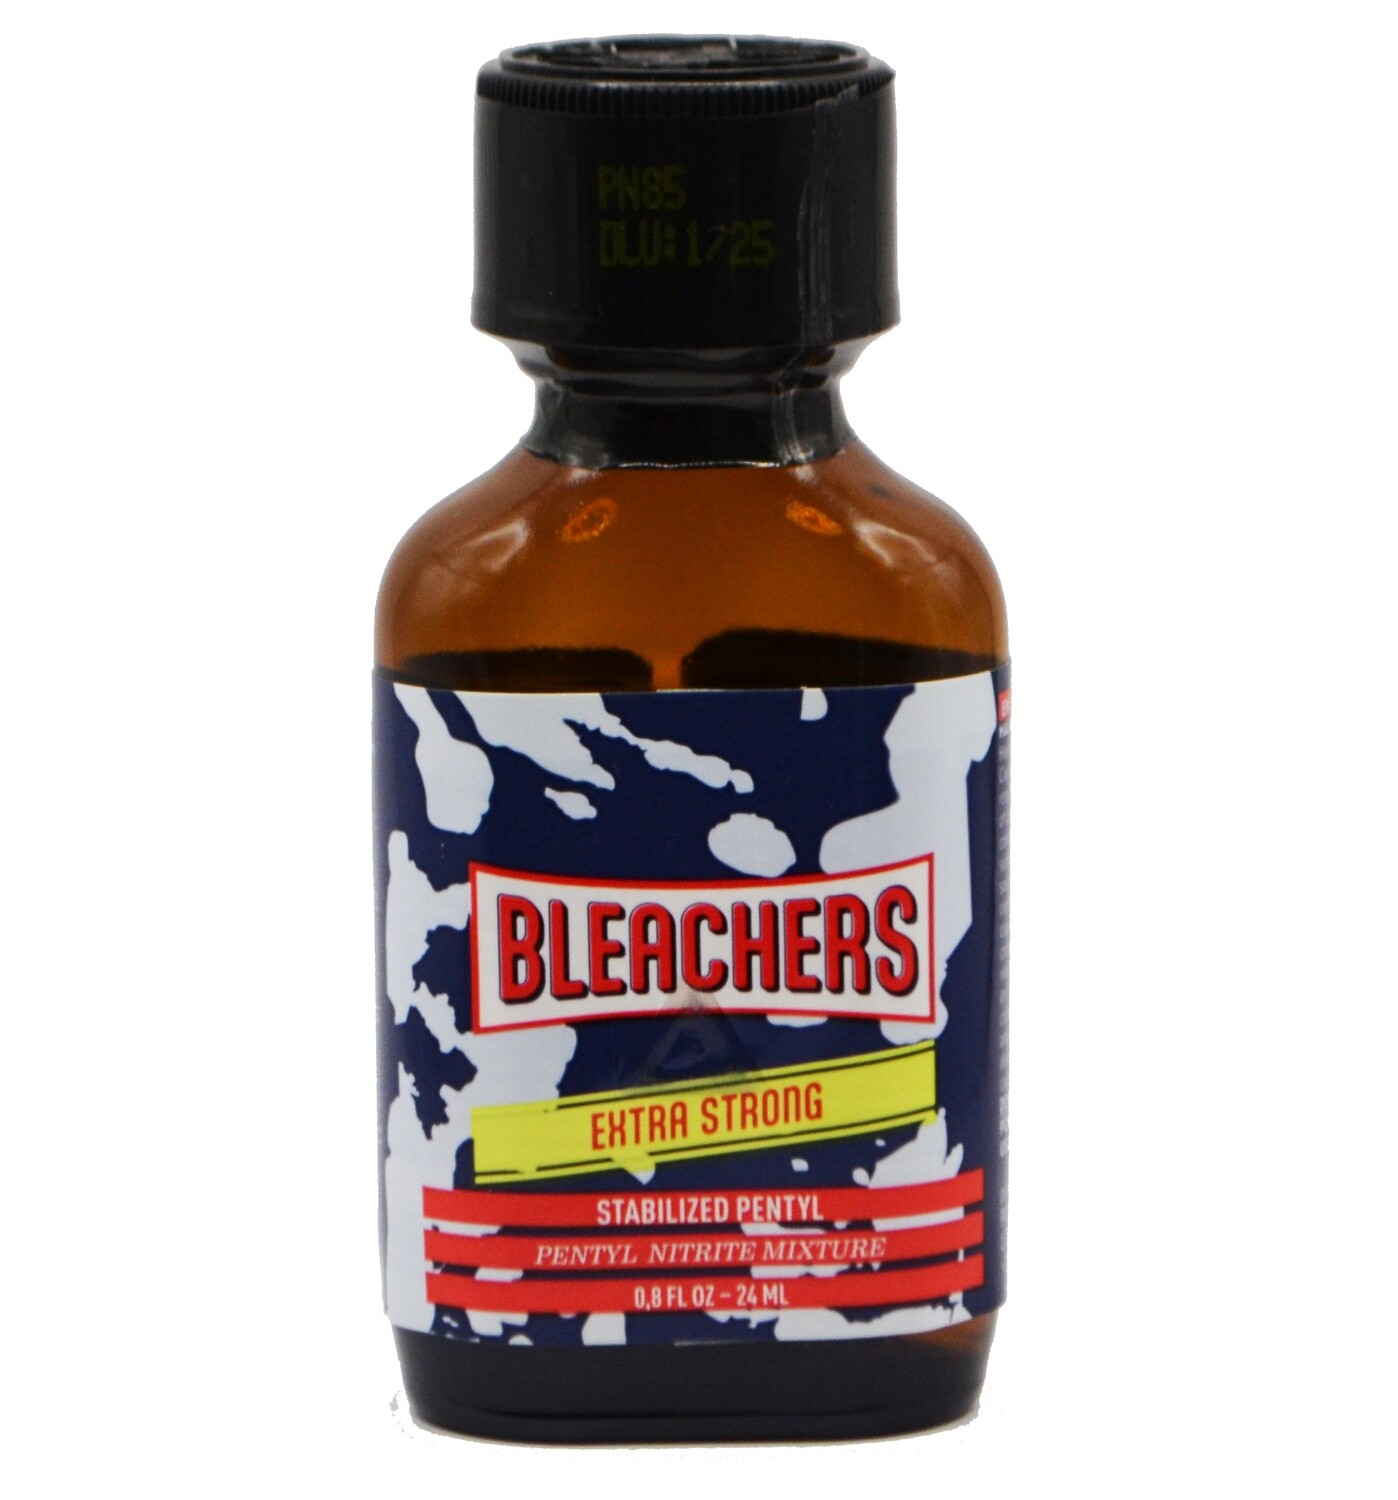 Bleachers extra strong lux 24 ml